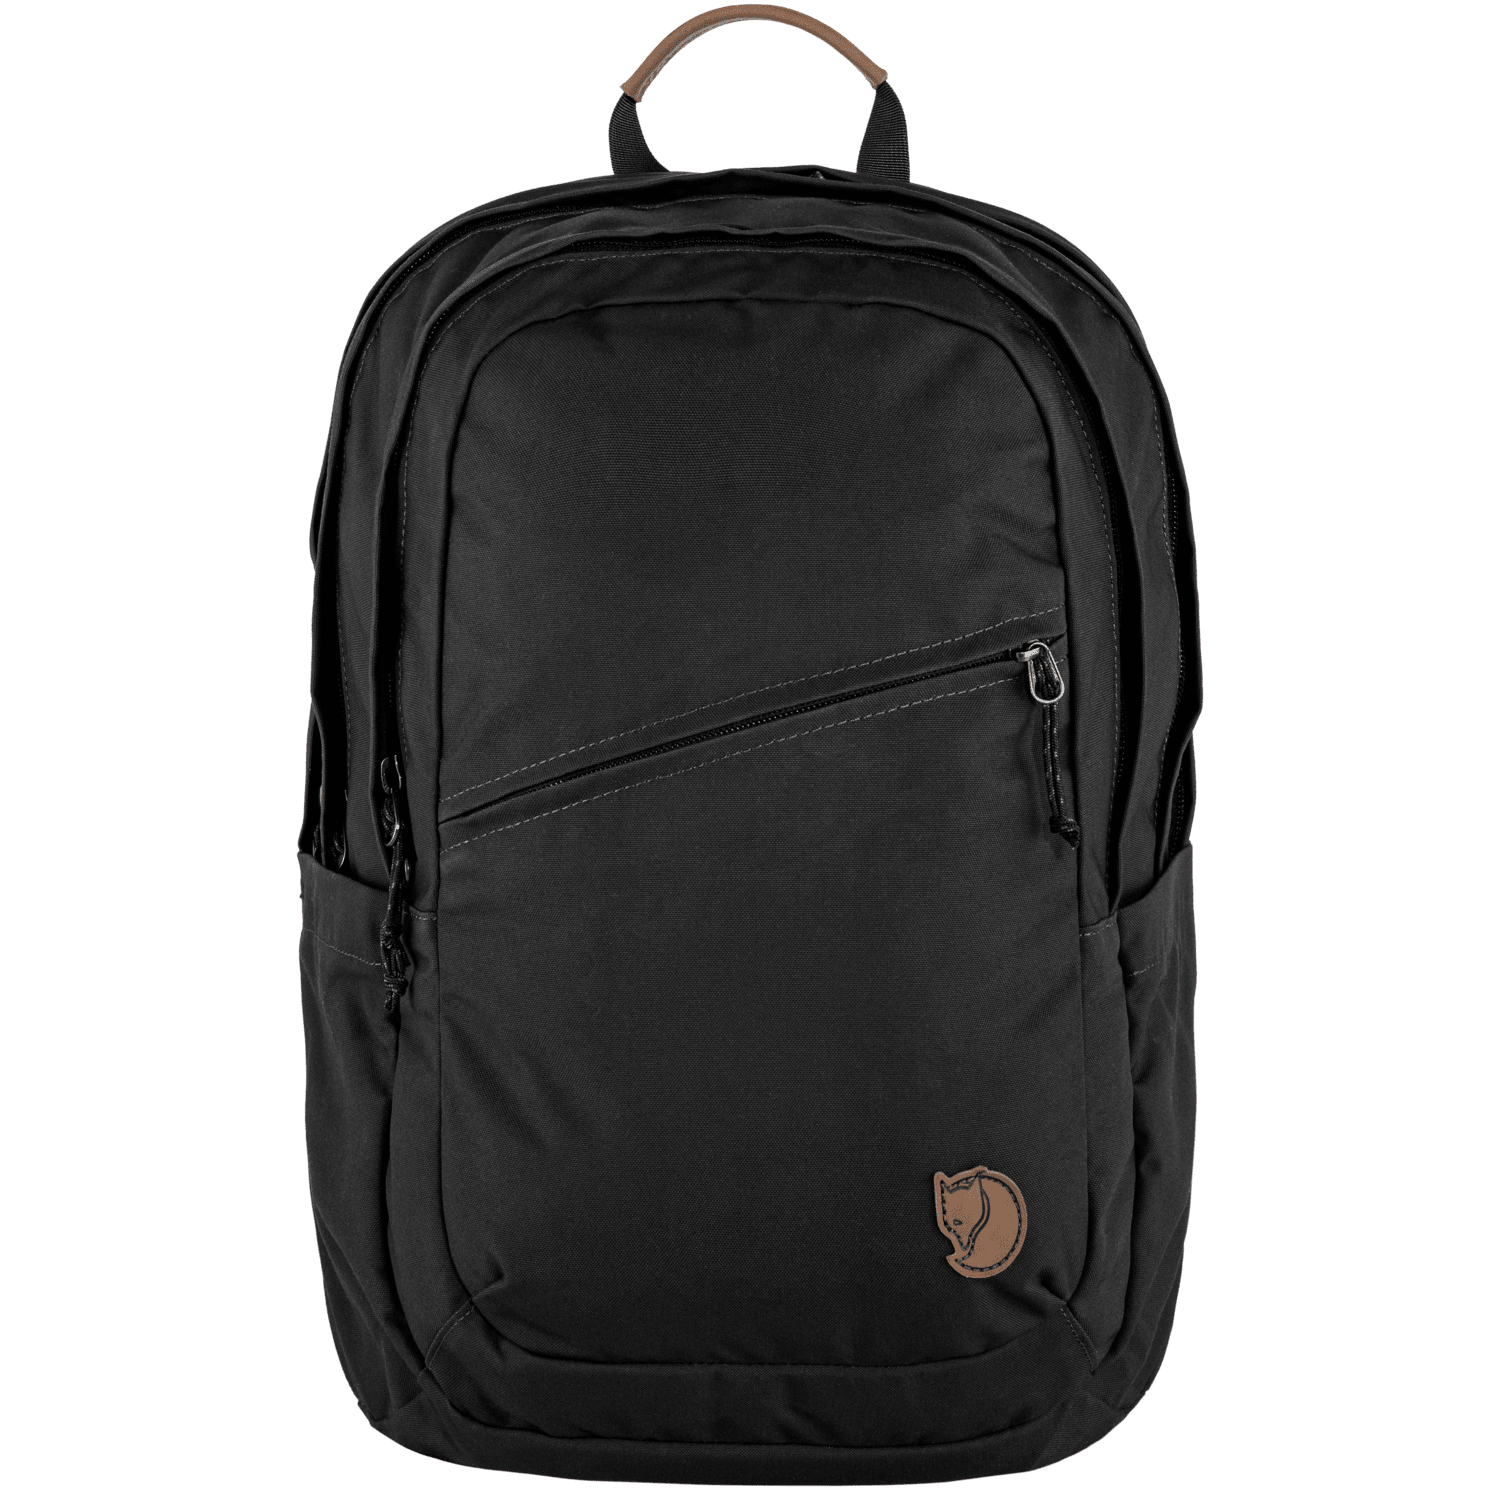 Fjällräven Räven 28l backpack - Recycled Polyester & Organic Cotton Black